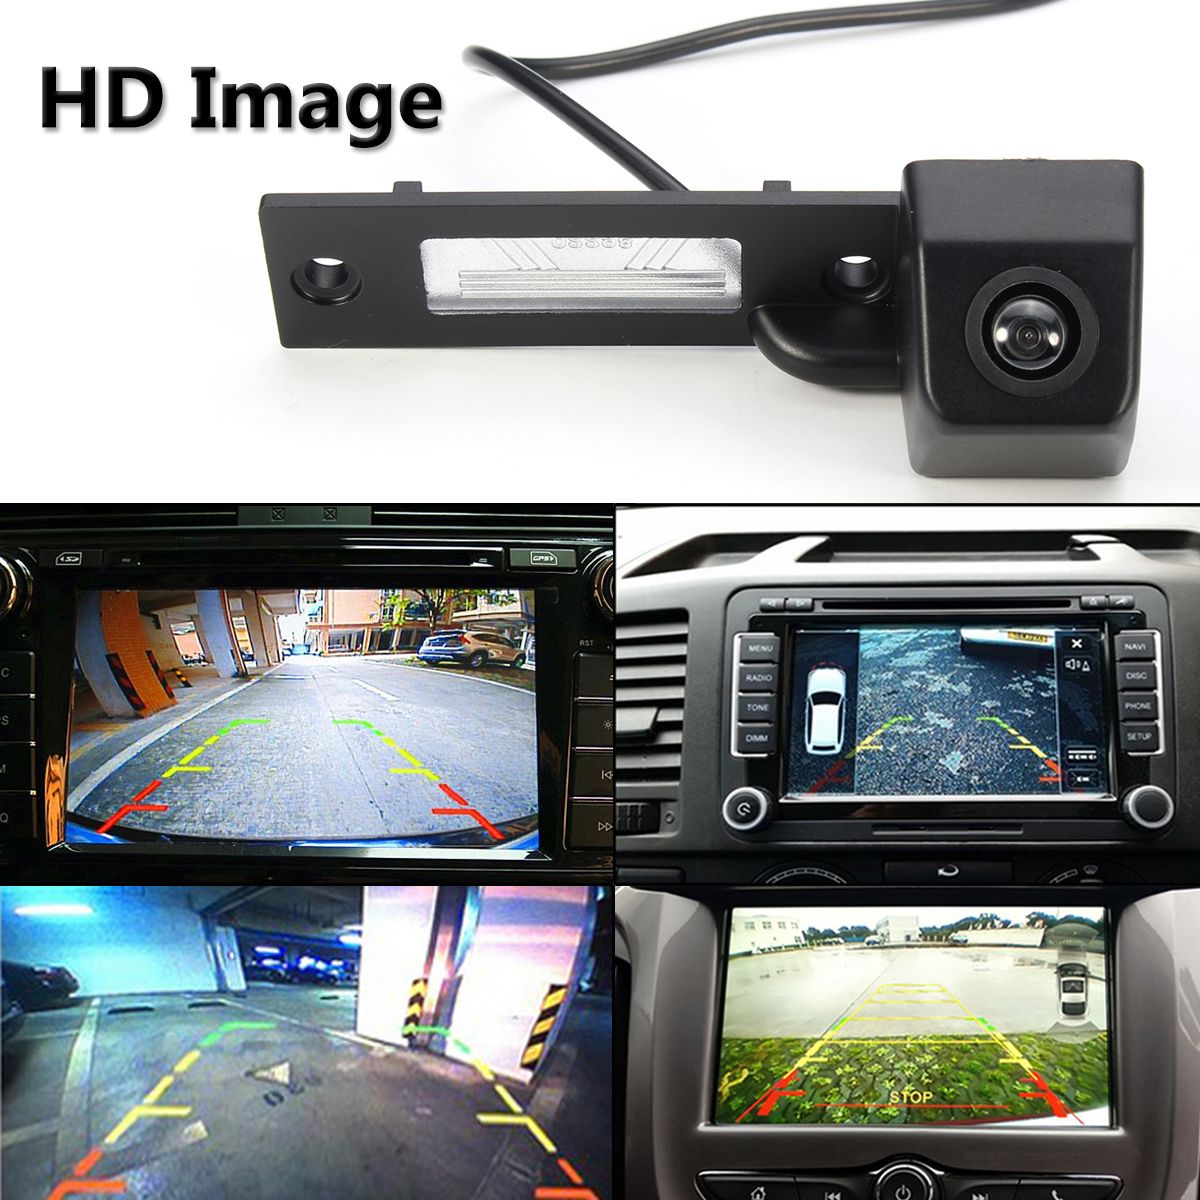 Wireless-Car-Auto-CCD-Reverse-Backup-Rear-View-Camera-for-VW-Caddy-Passat-Jetta-1242507